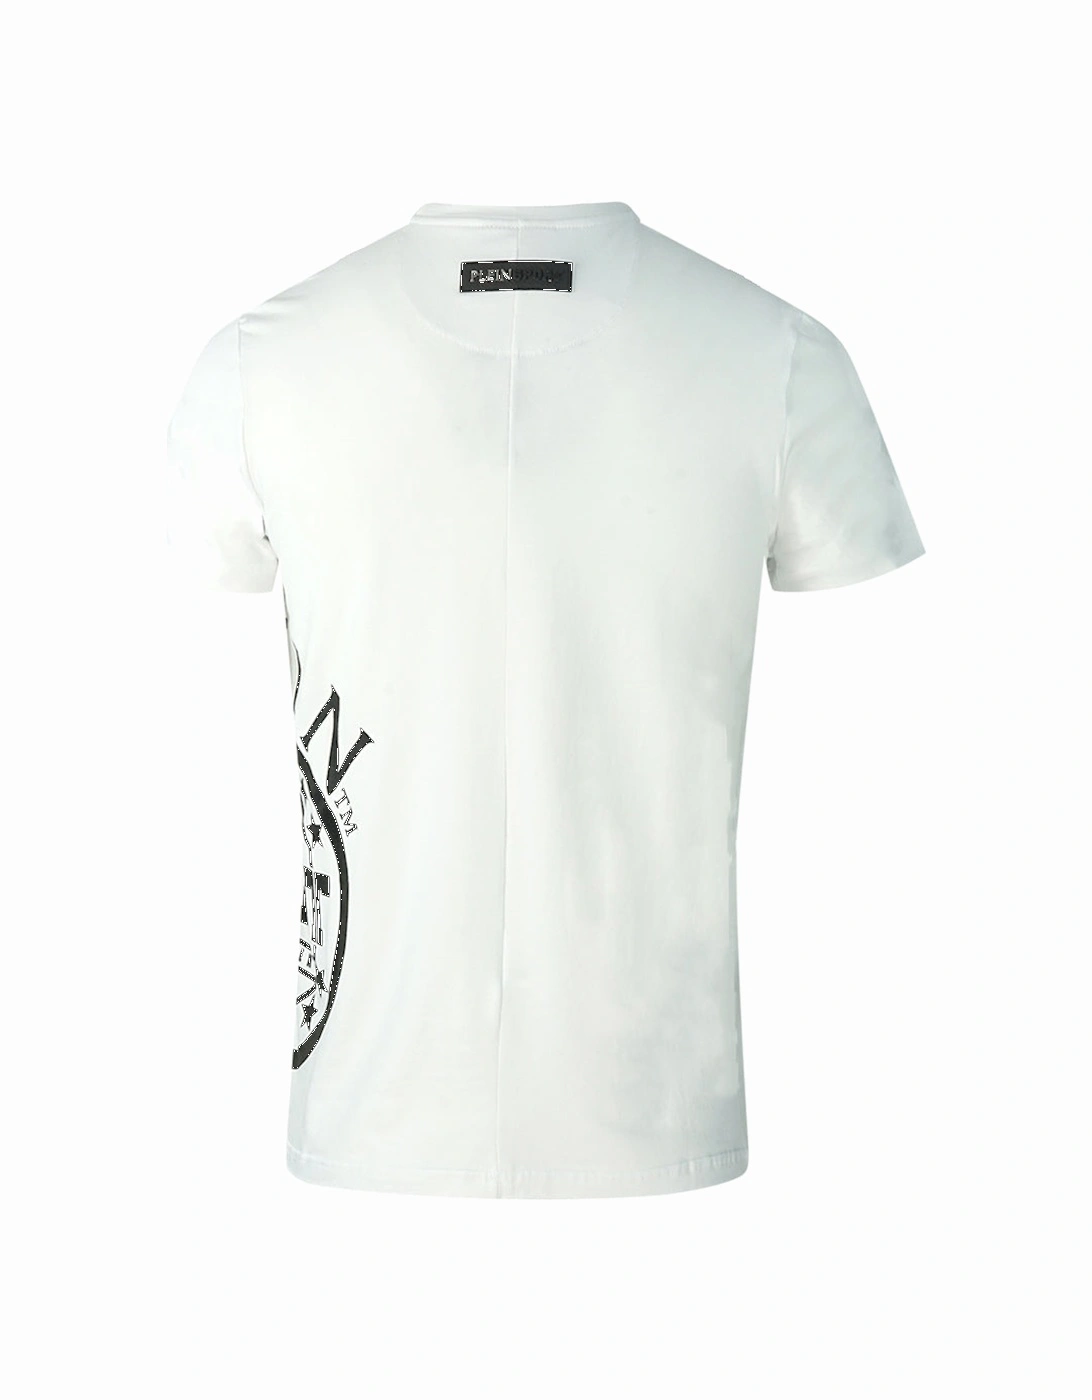 Plein Sport Side Logo White T-Shirt